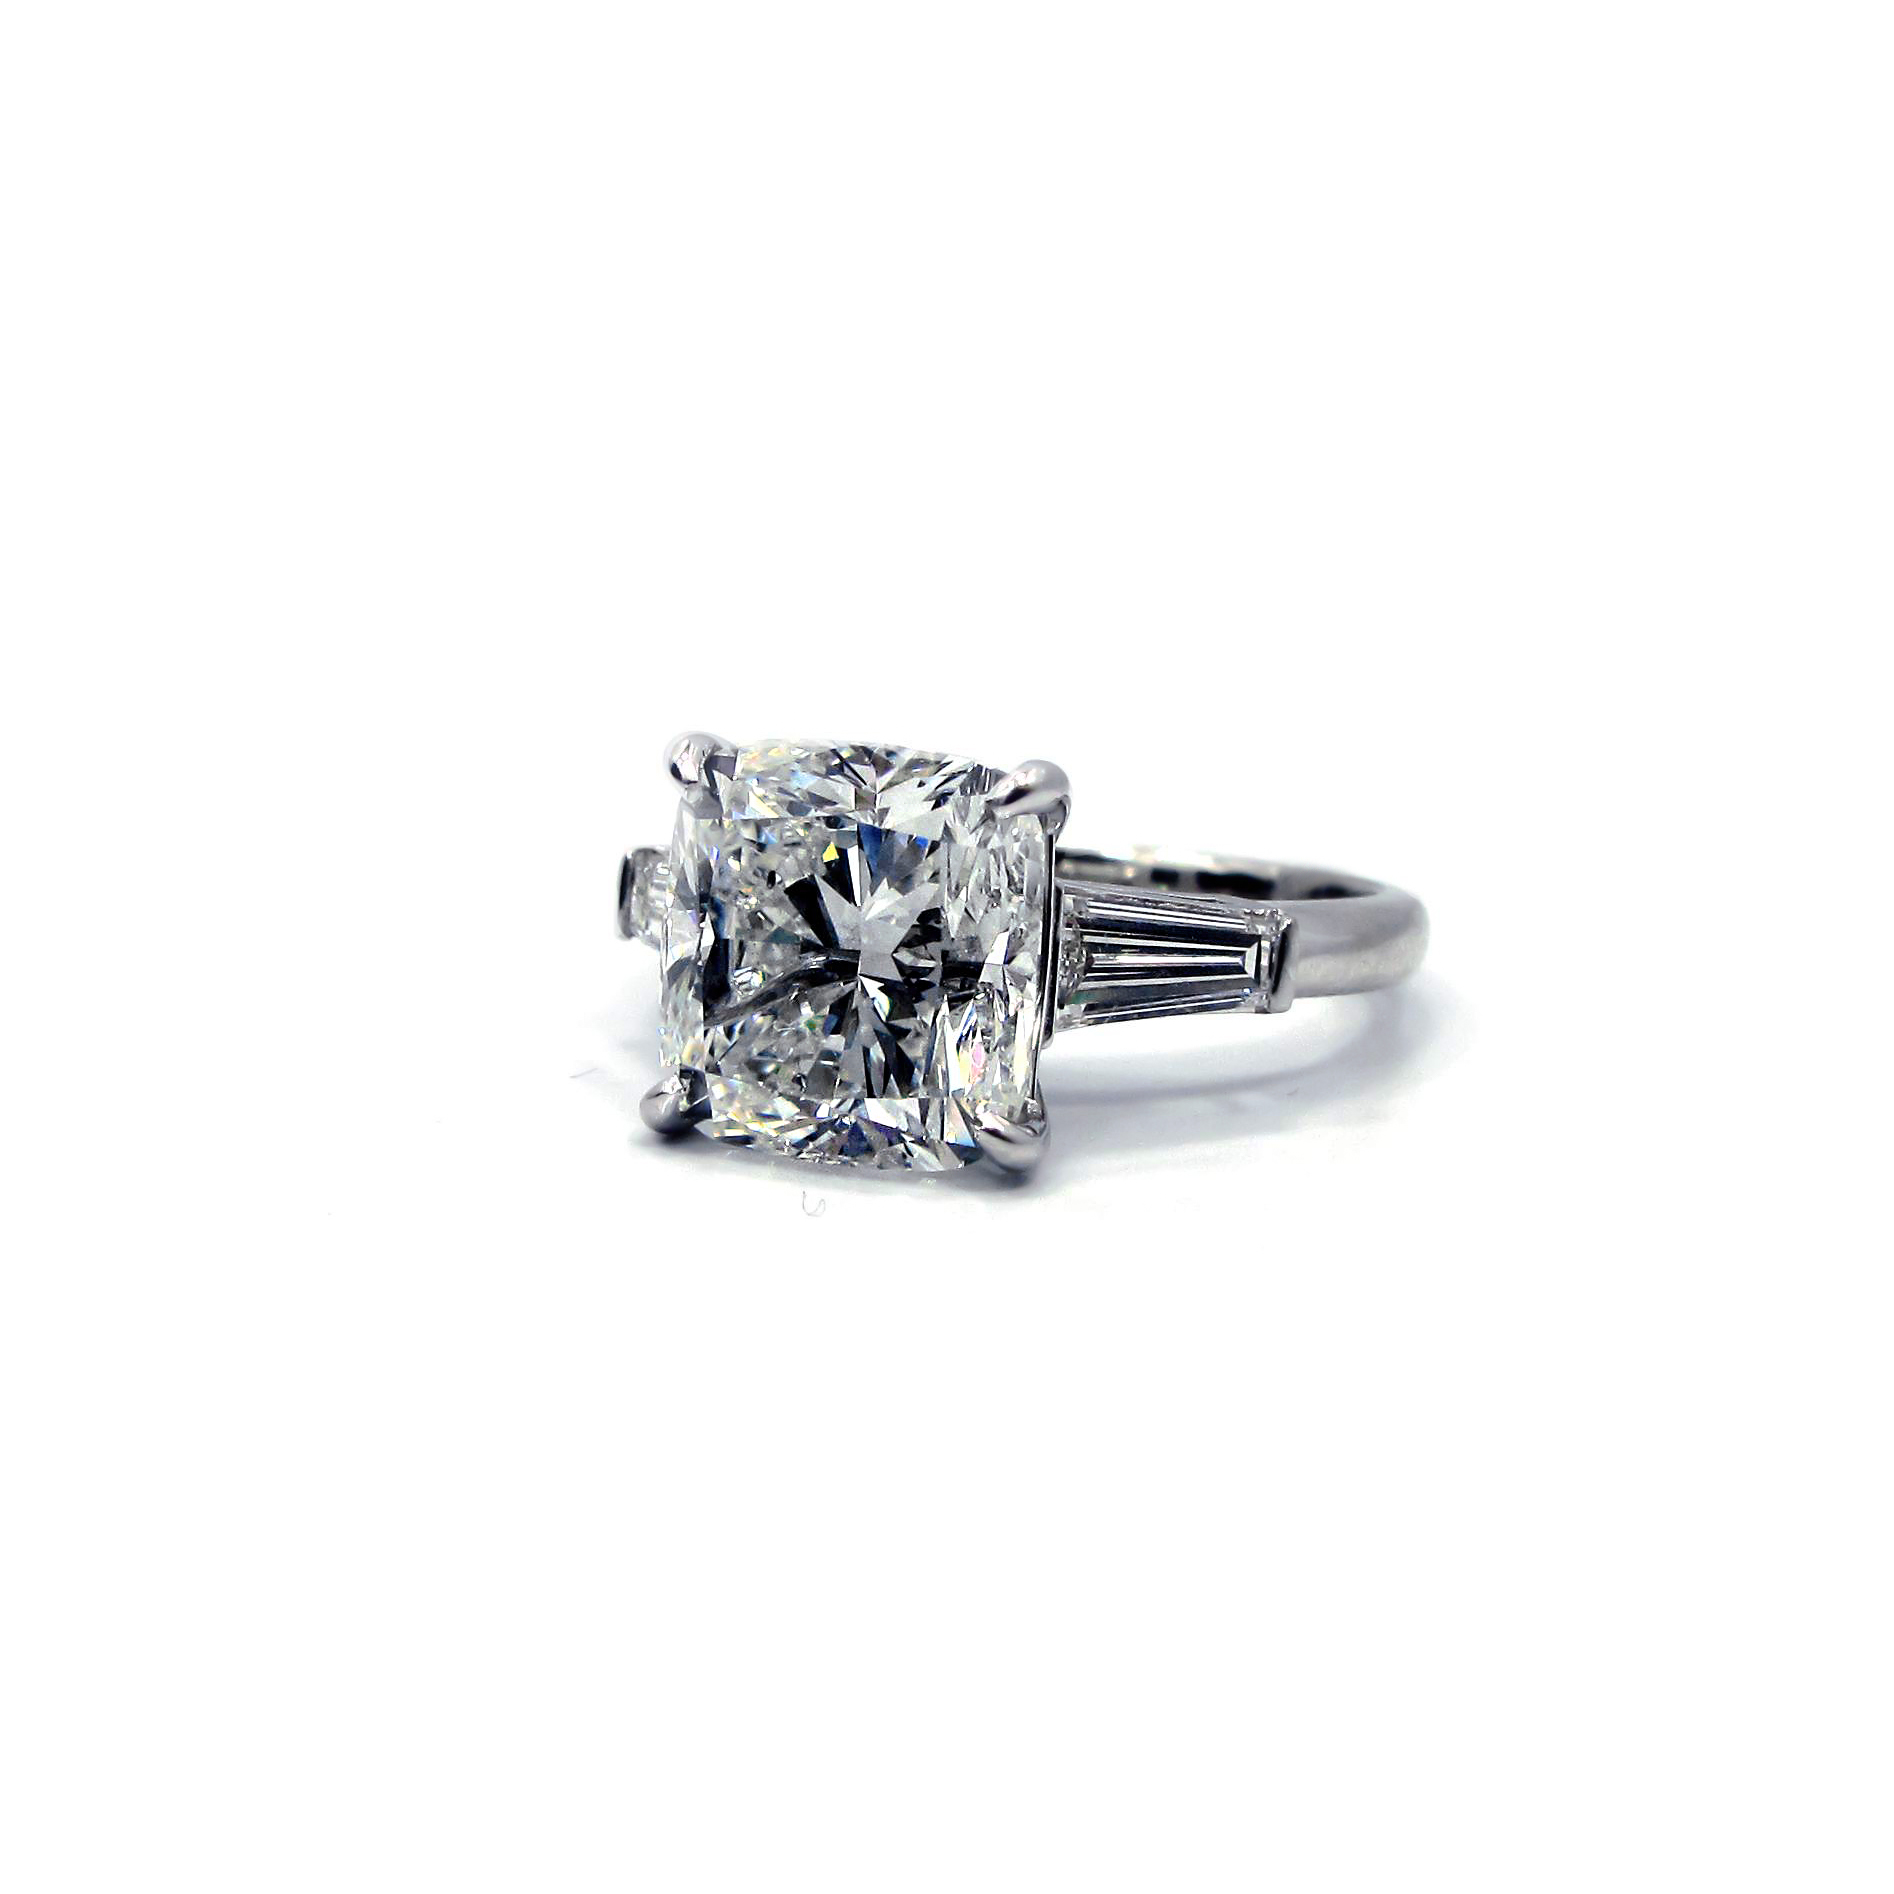 Cushion Diamond Ring. Designed by Reuven Gitter Jewelers